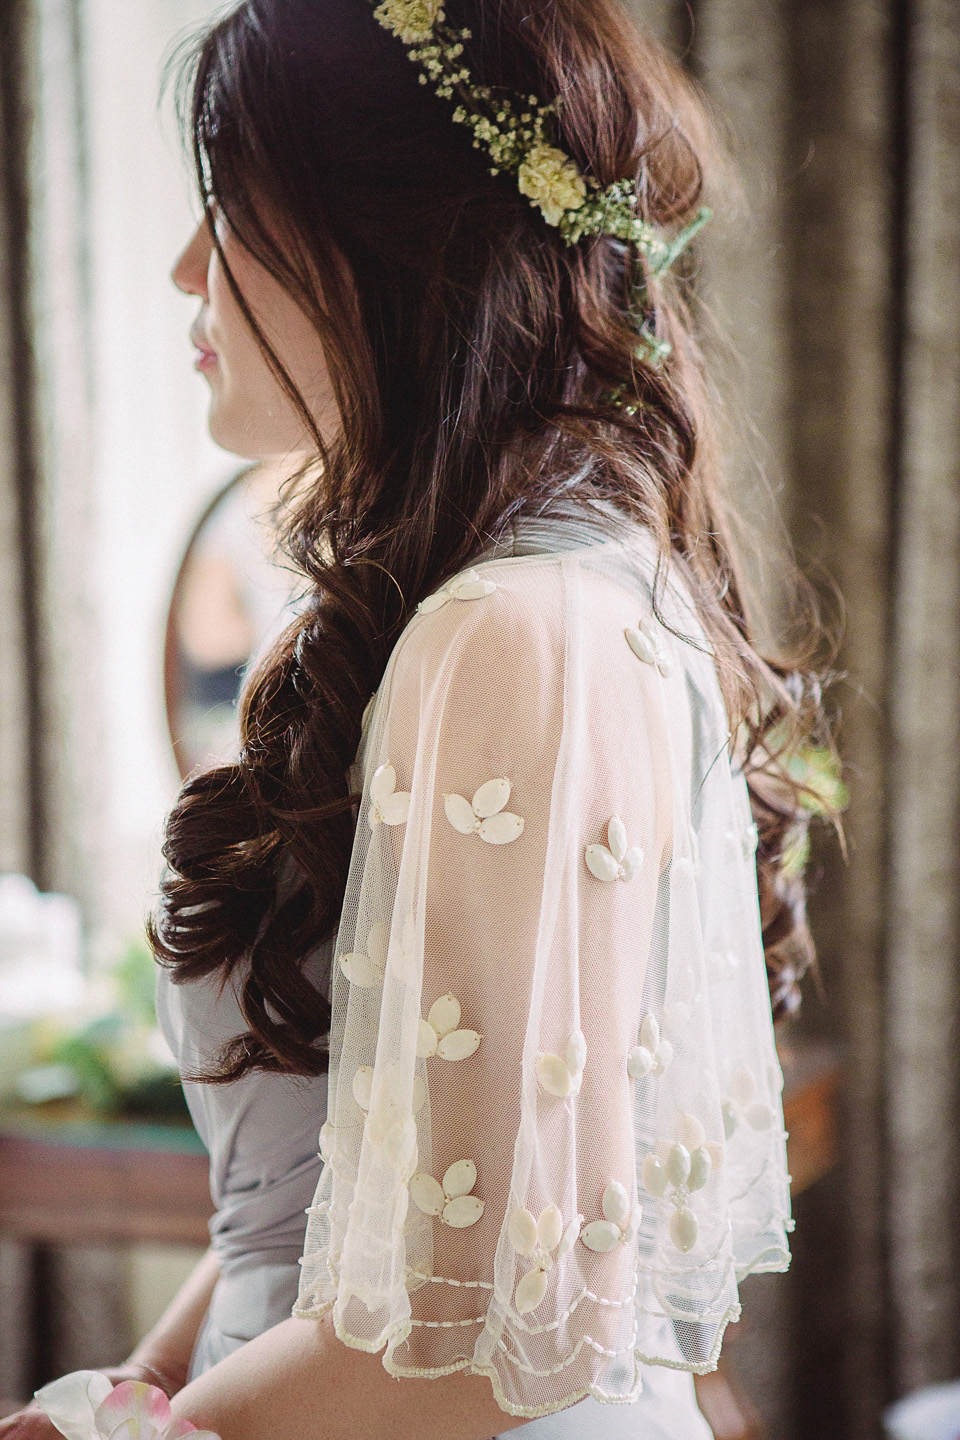 The bride wears Eliza Jane Howell for her elegant Spring wedding at Iscoyd Park. Photography by Jade Osborne.